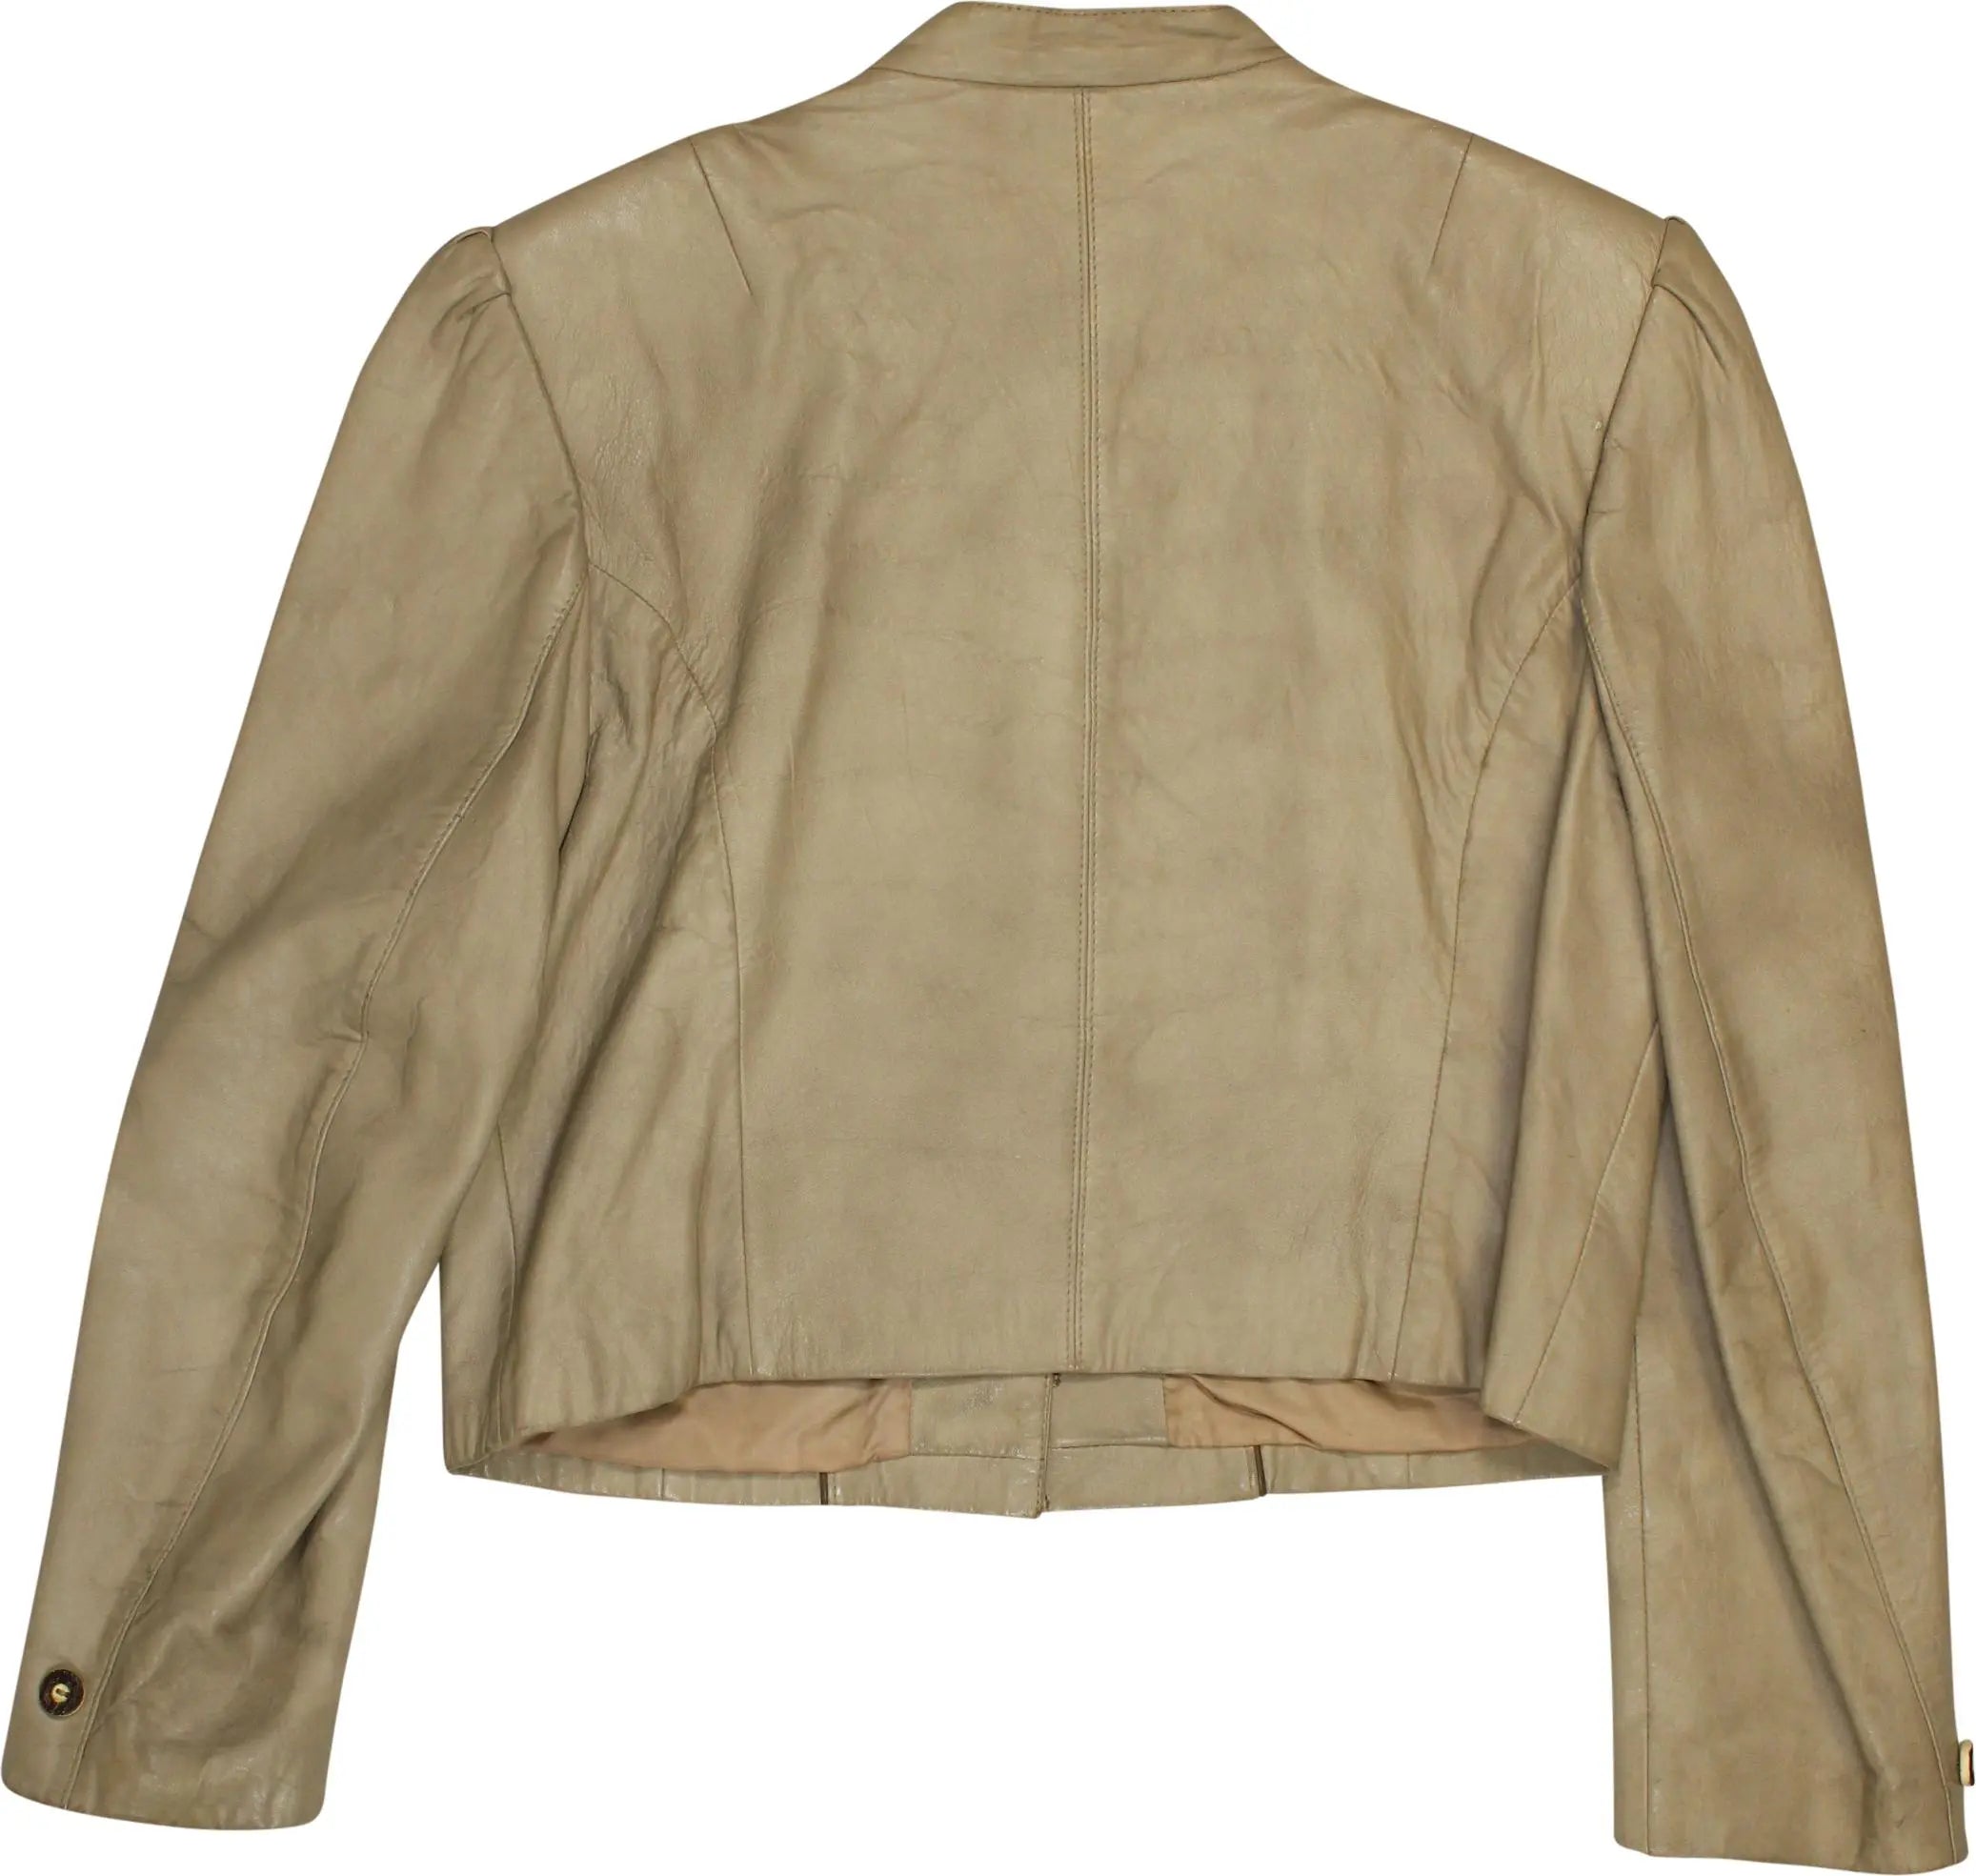 Alphorn - Beige Leather Jacket- ThriftTale.com - Vintage and second handclothing